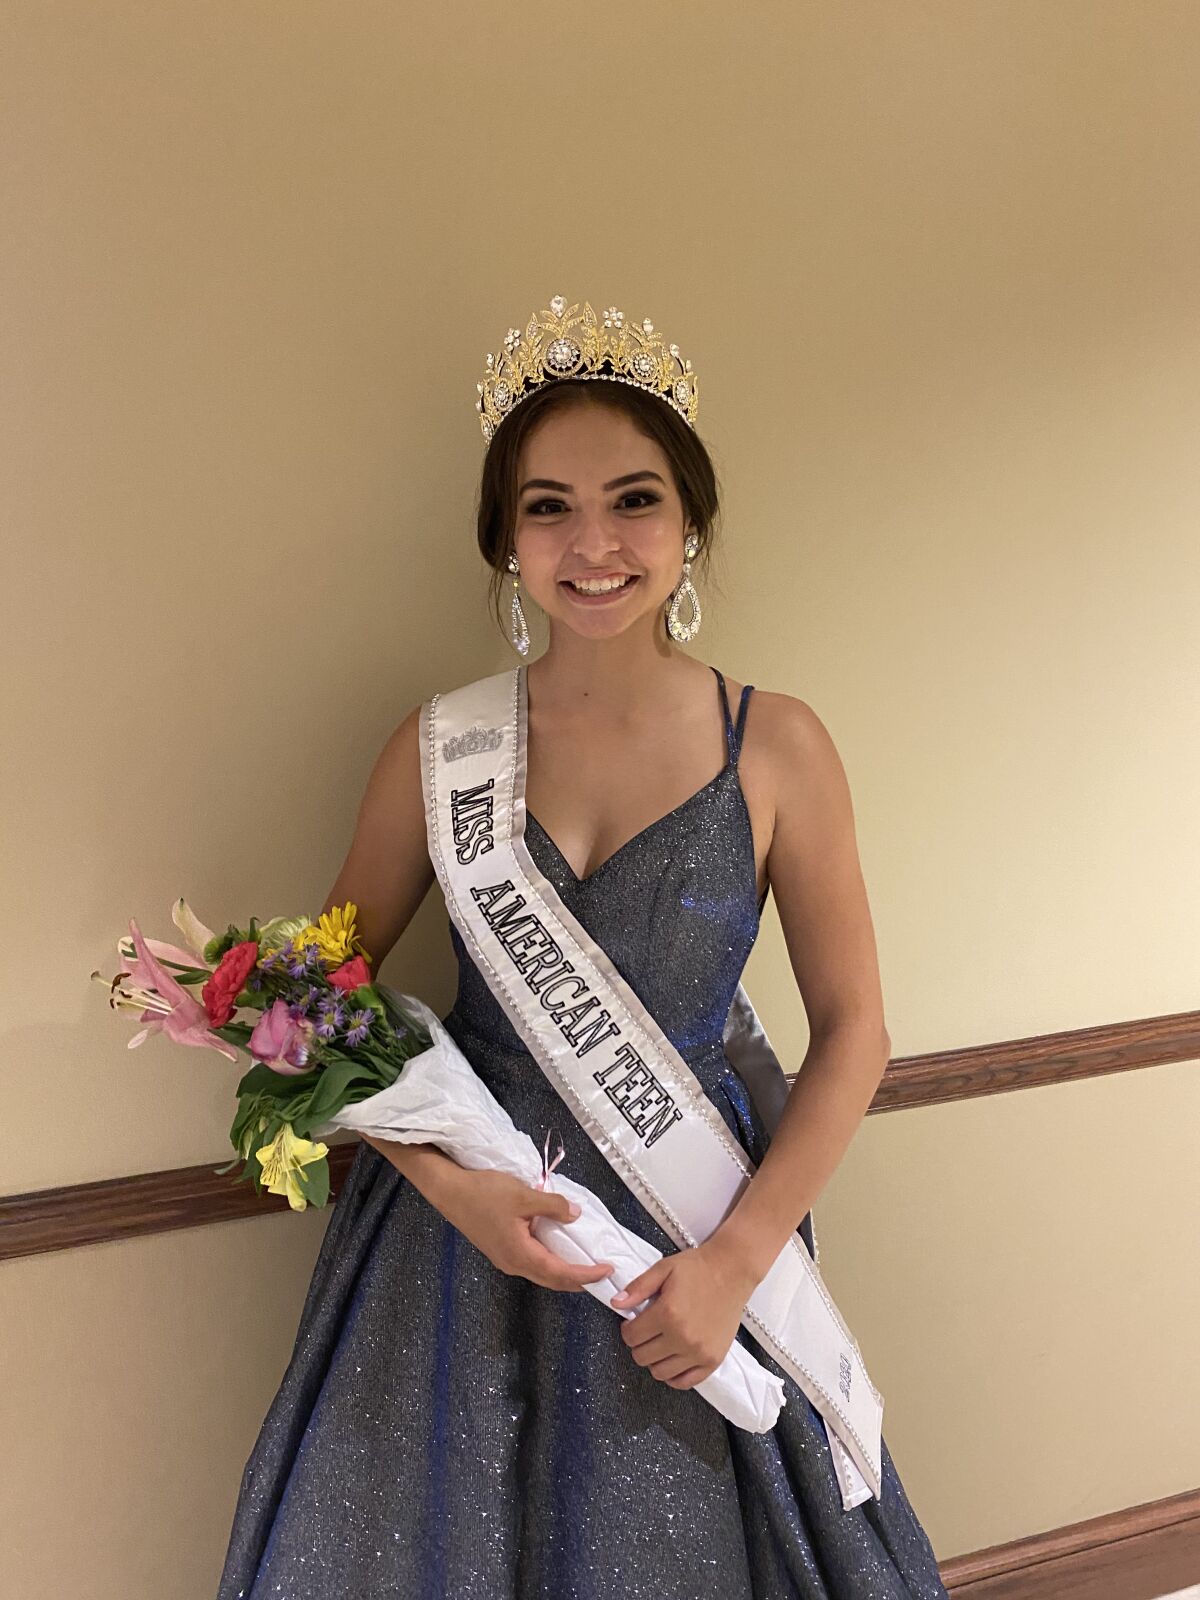 La Jolla Country Day School student Jenna Rain Hernandez is the 2020 Miss American Teen pageant winner.